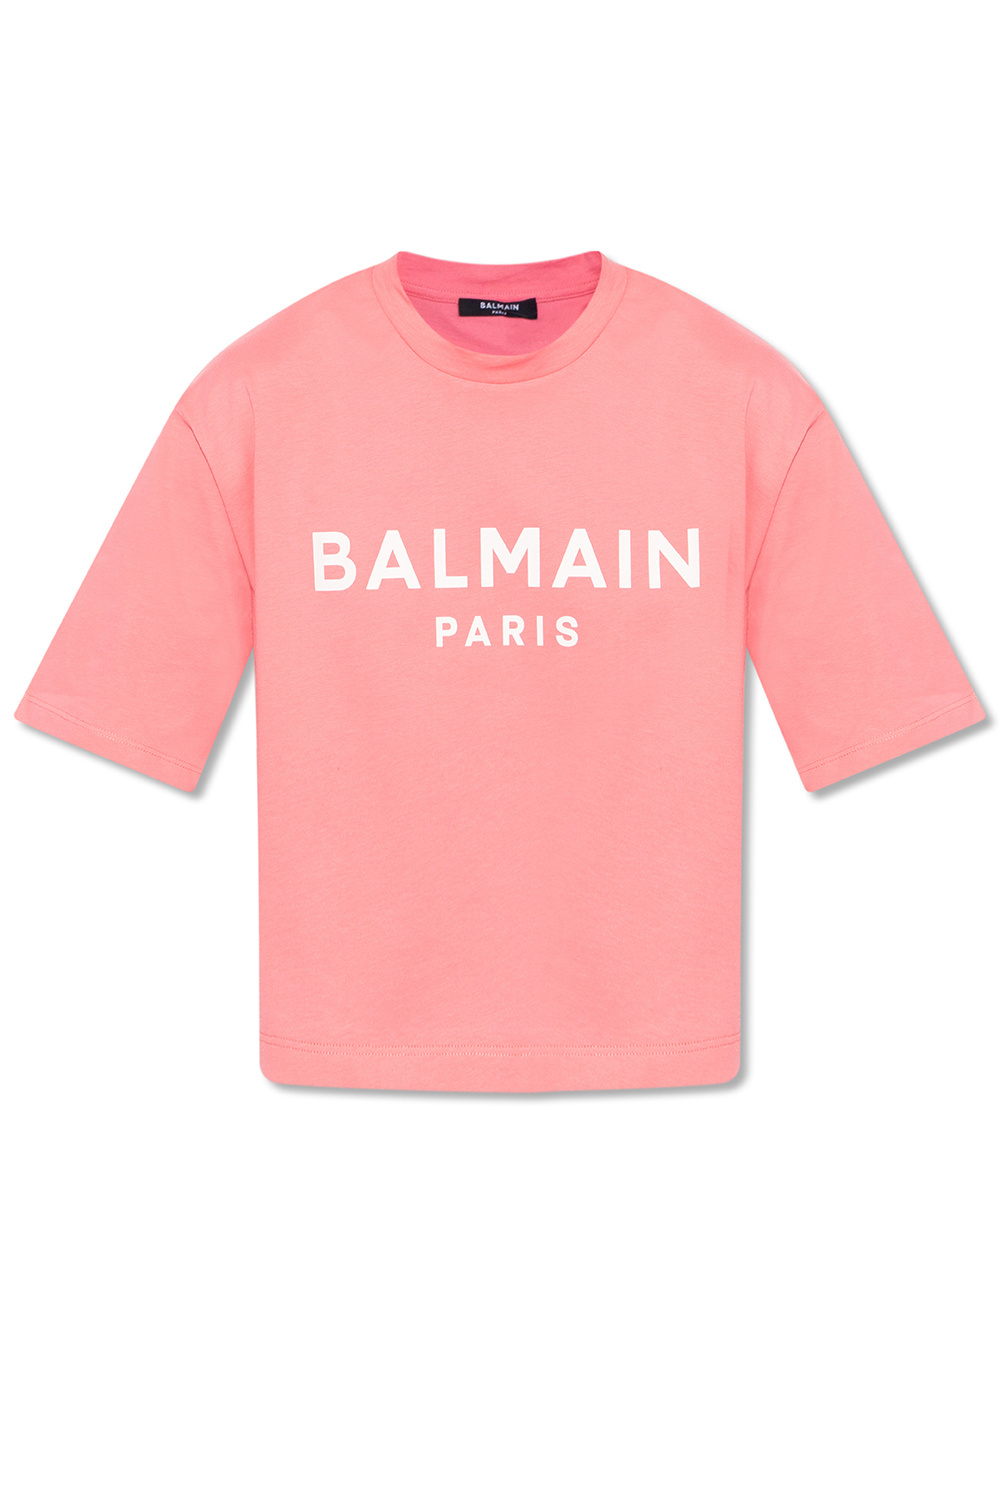 T-shirt with logo Balmain - JmksportShops